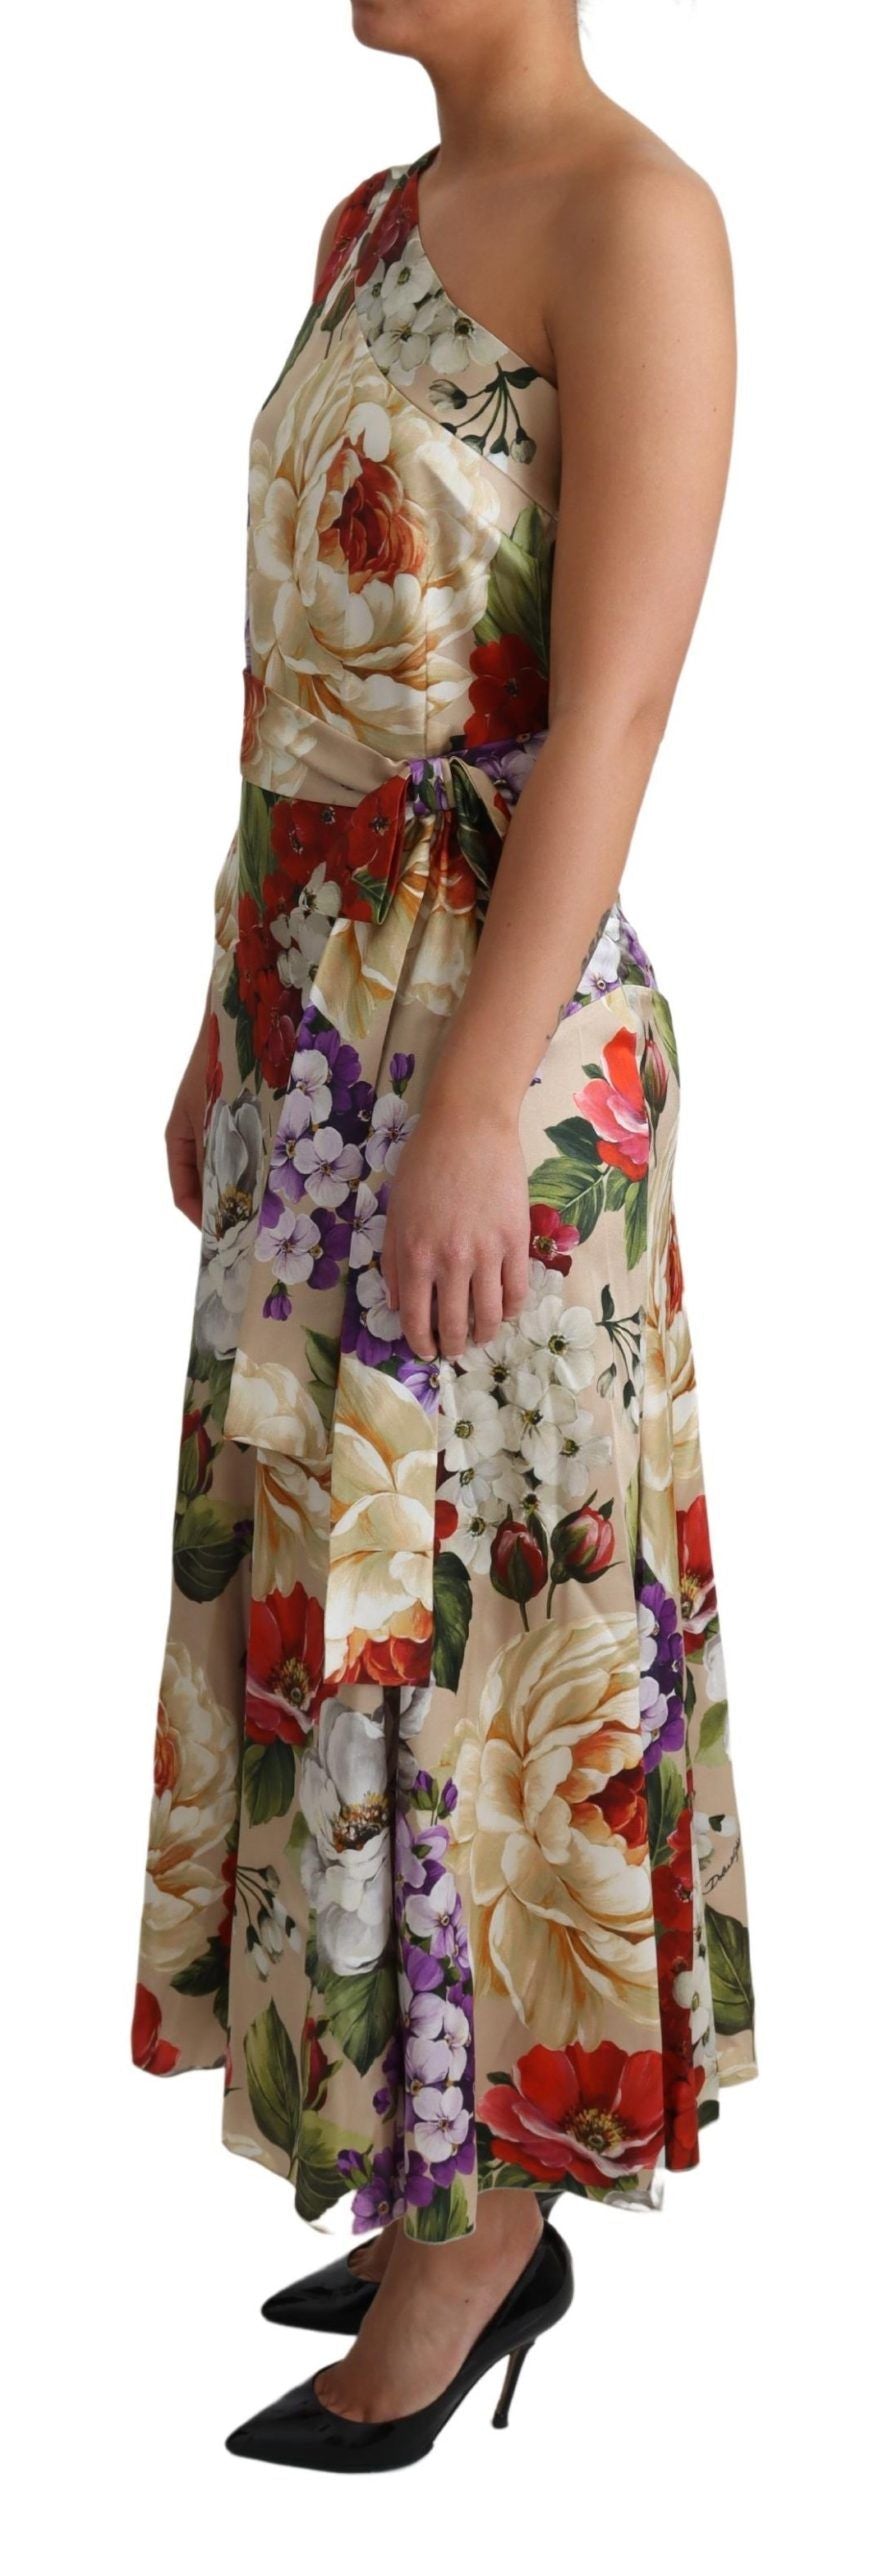 Dolce & Gabbana Print Silk Stretch One Shoulder Dress Floral